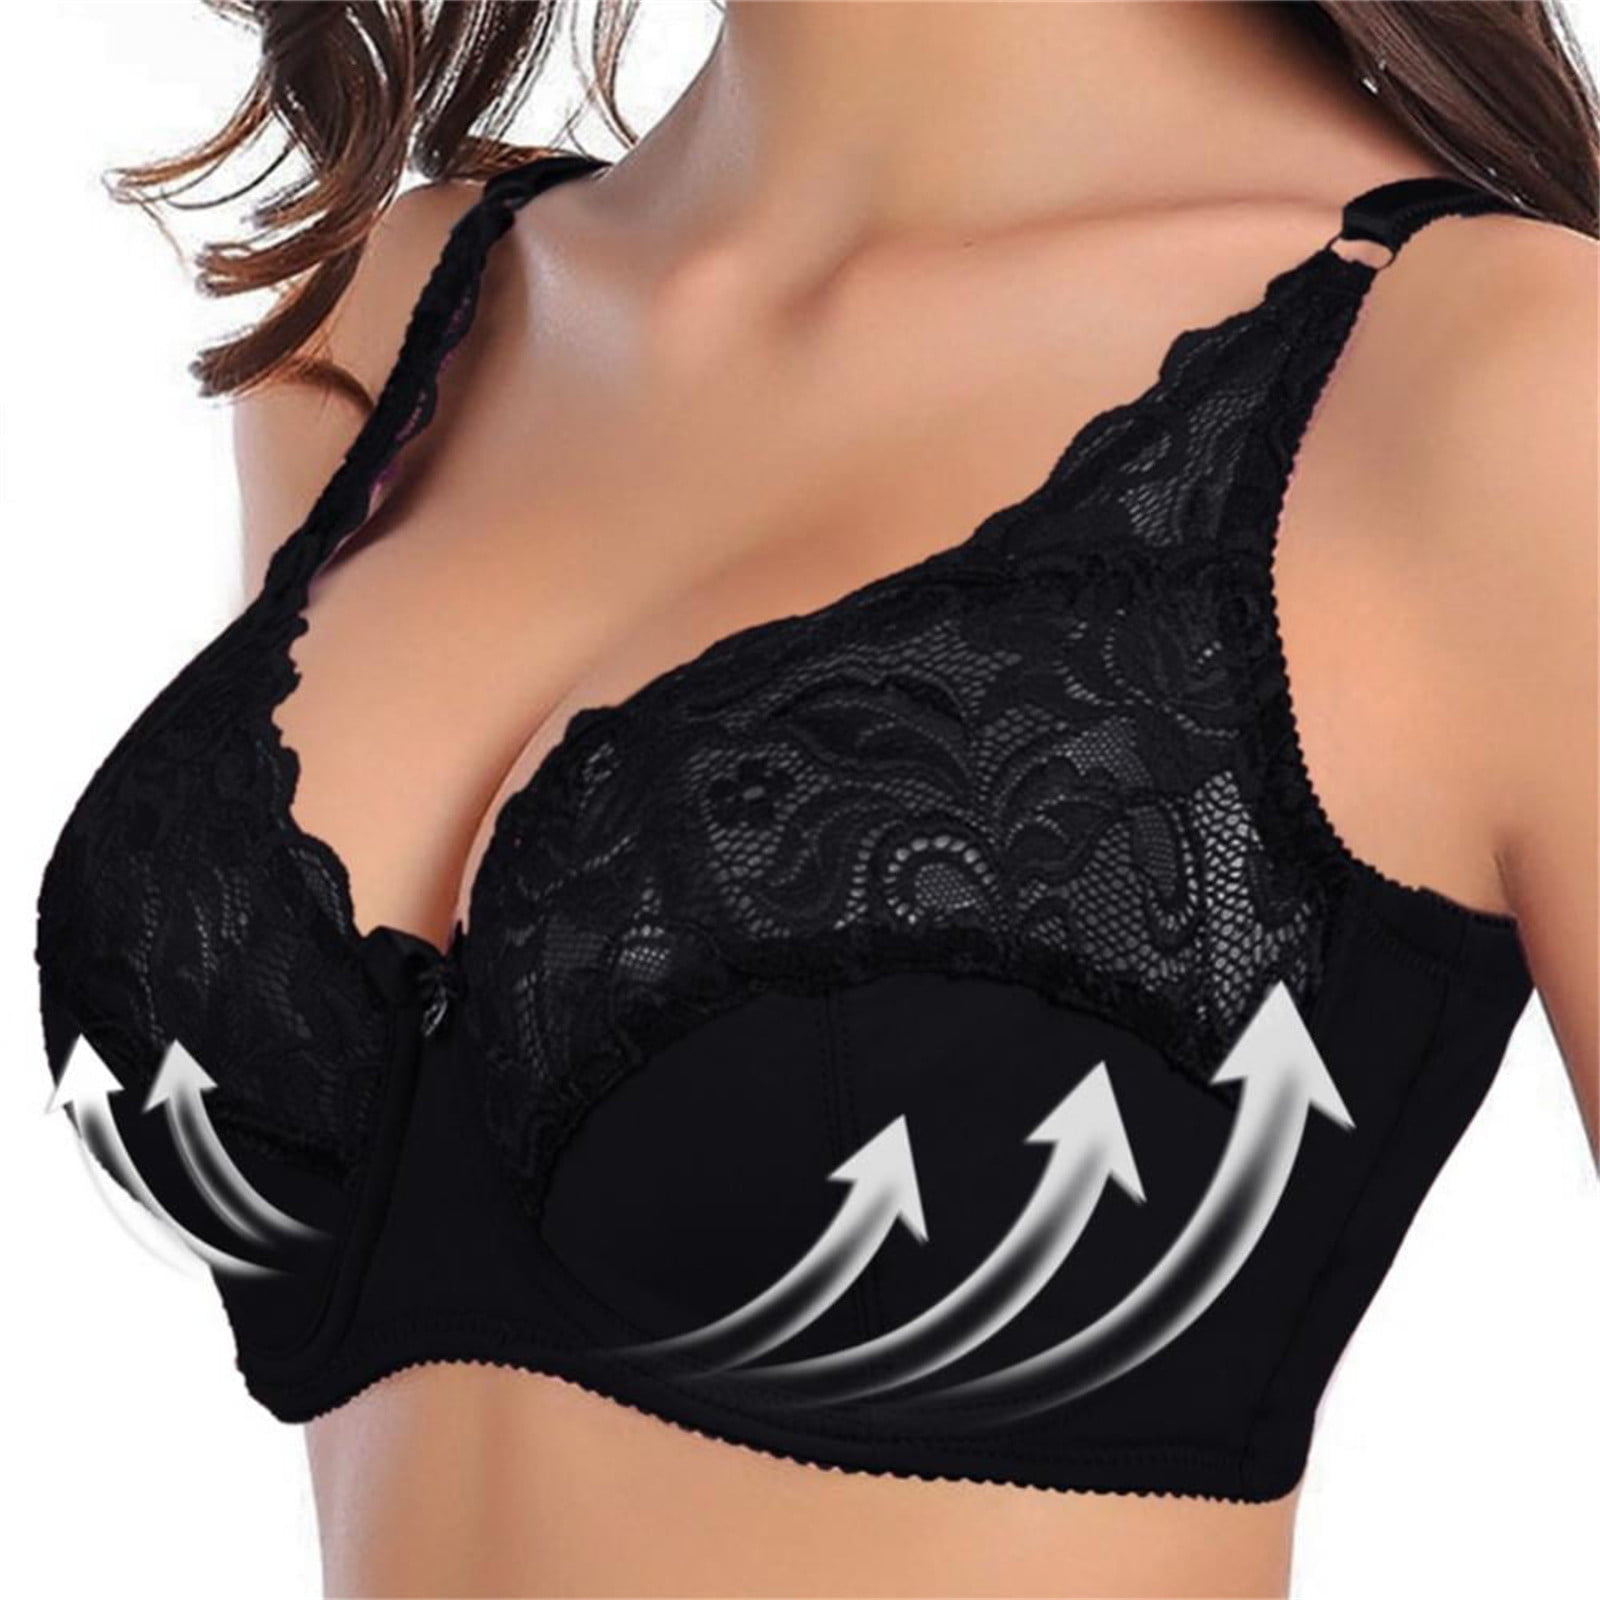 Comfort lace minimizer bra - Anil 3697 